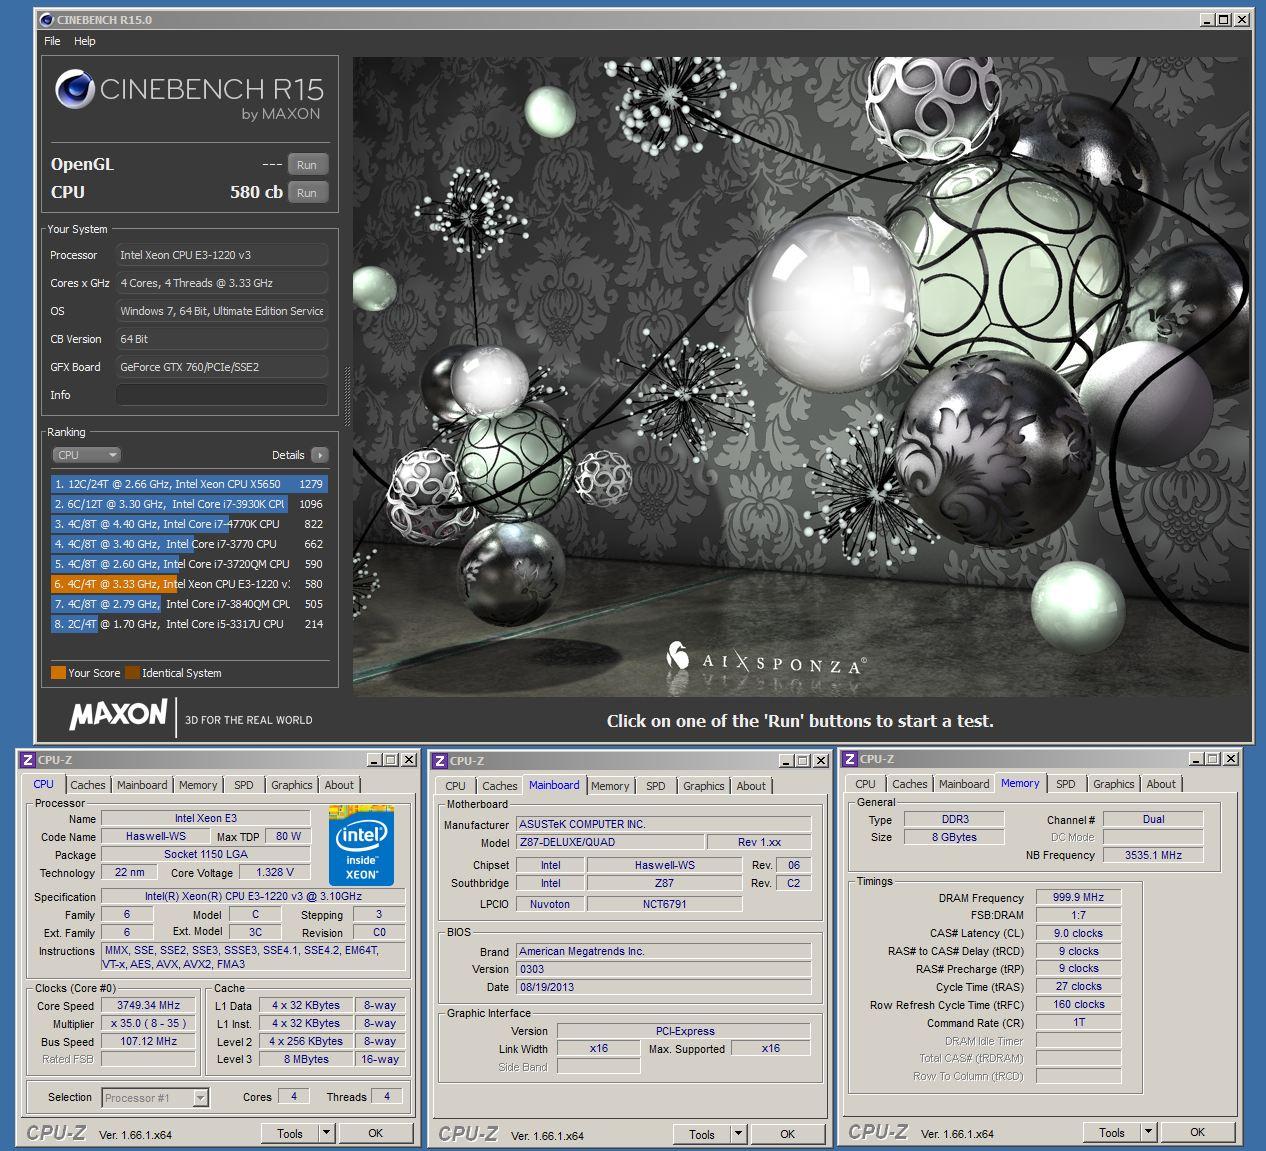 brian`s Cinebench - R15 score: 580 cb with a Xeon E3 1220 v3